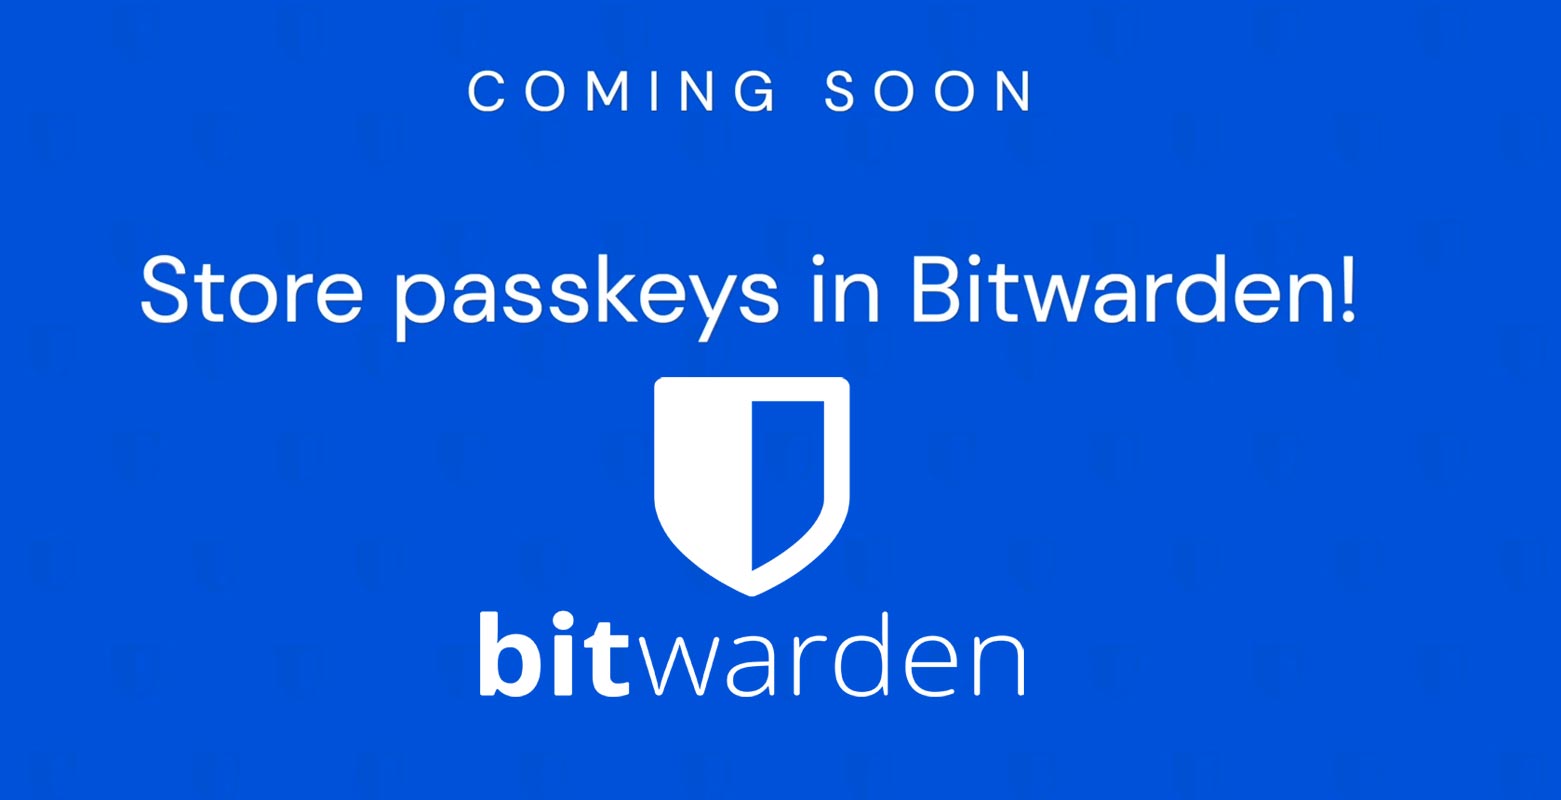 bitwarden Passkeys Coming